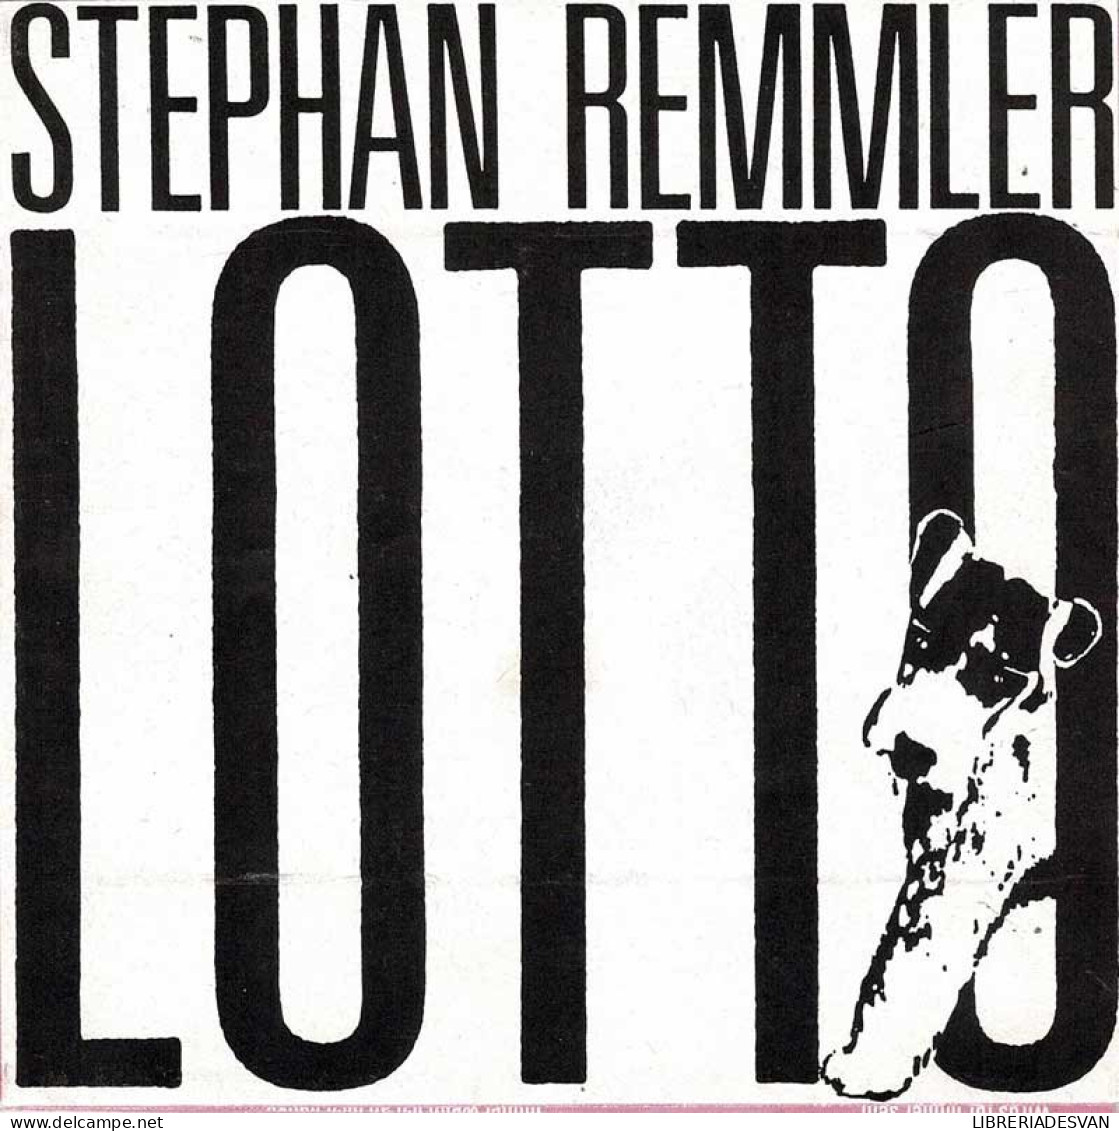 Stephan Remmler - Lotto. CD - Disco, Pop